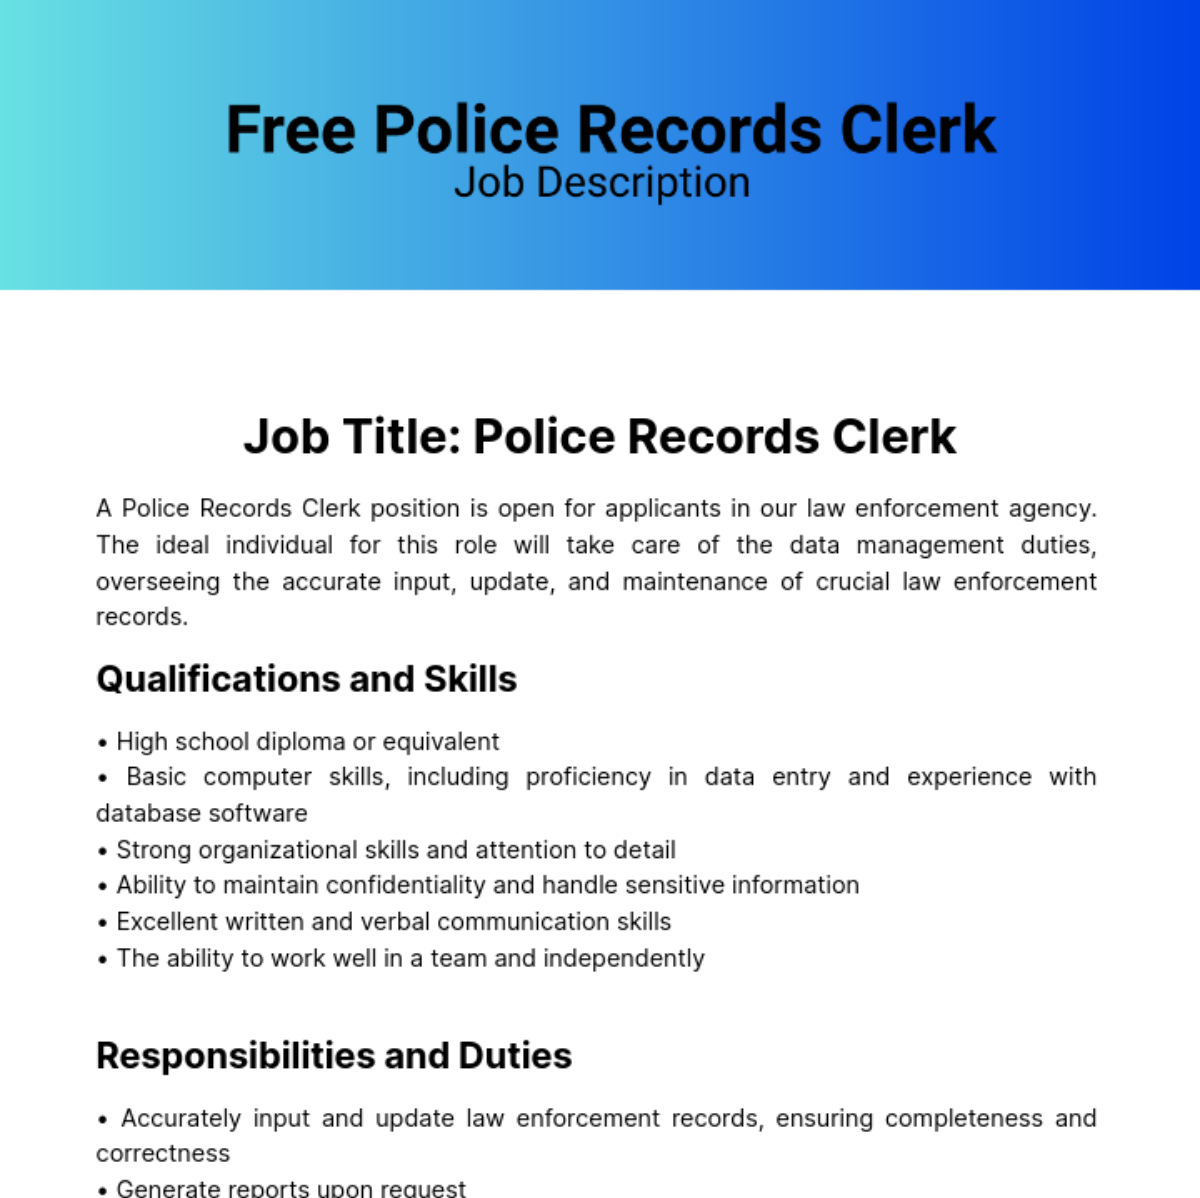 Free Police Records Clerk Job Description Template